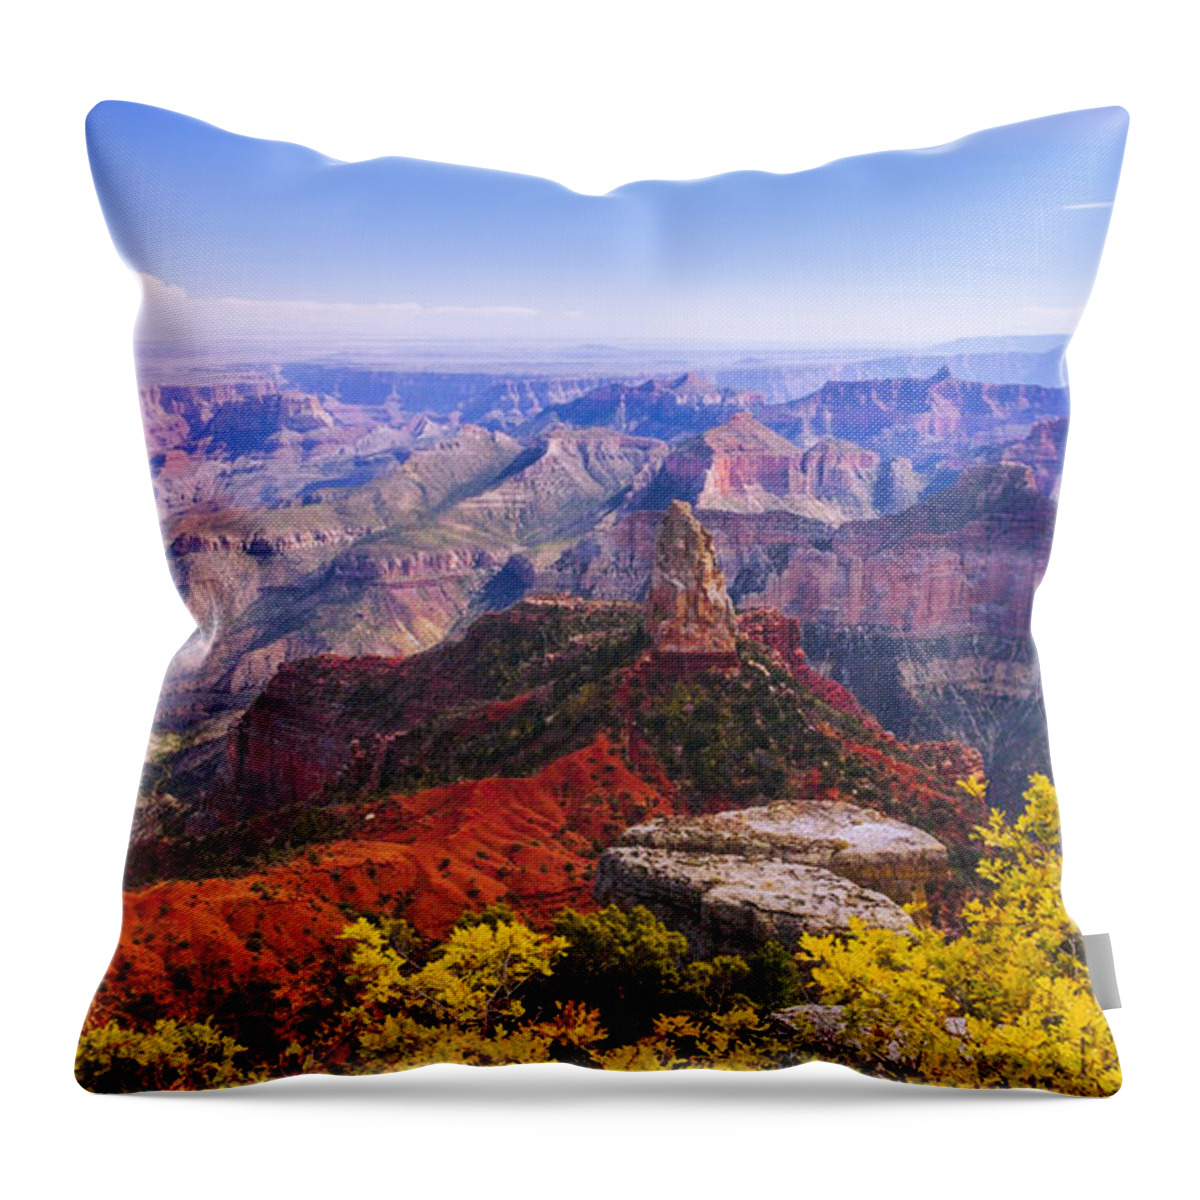 Grand Arizona Throw Pillow featuring the photograph Grand Arizona by Chad Dutson